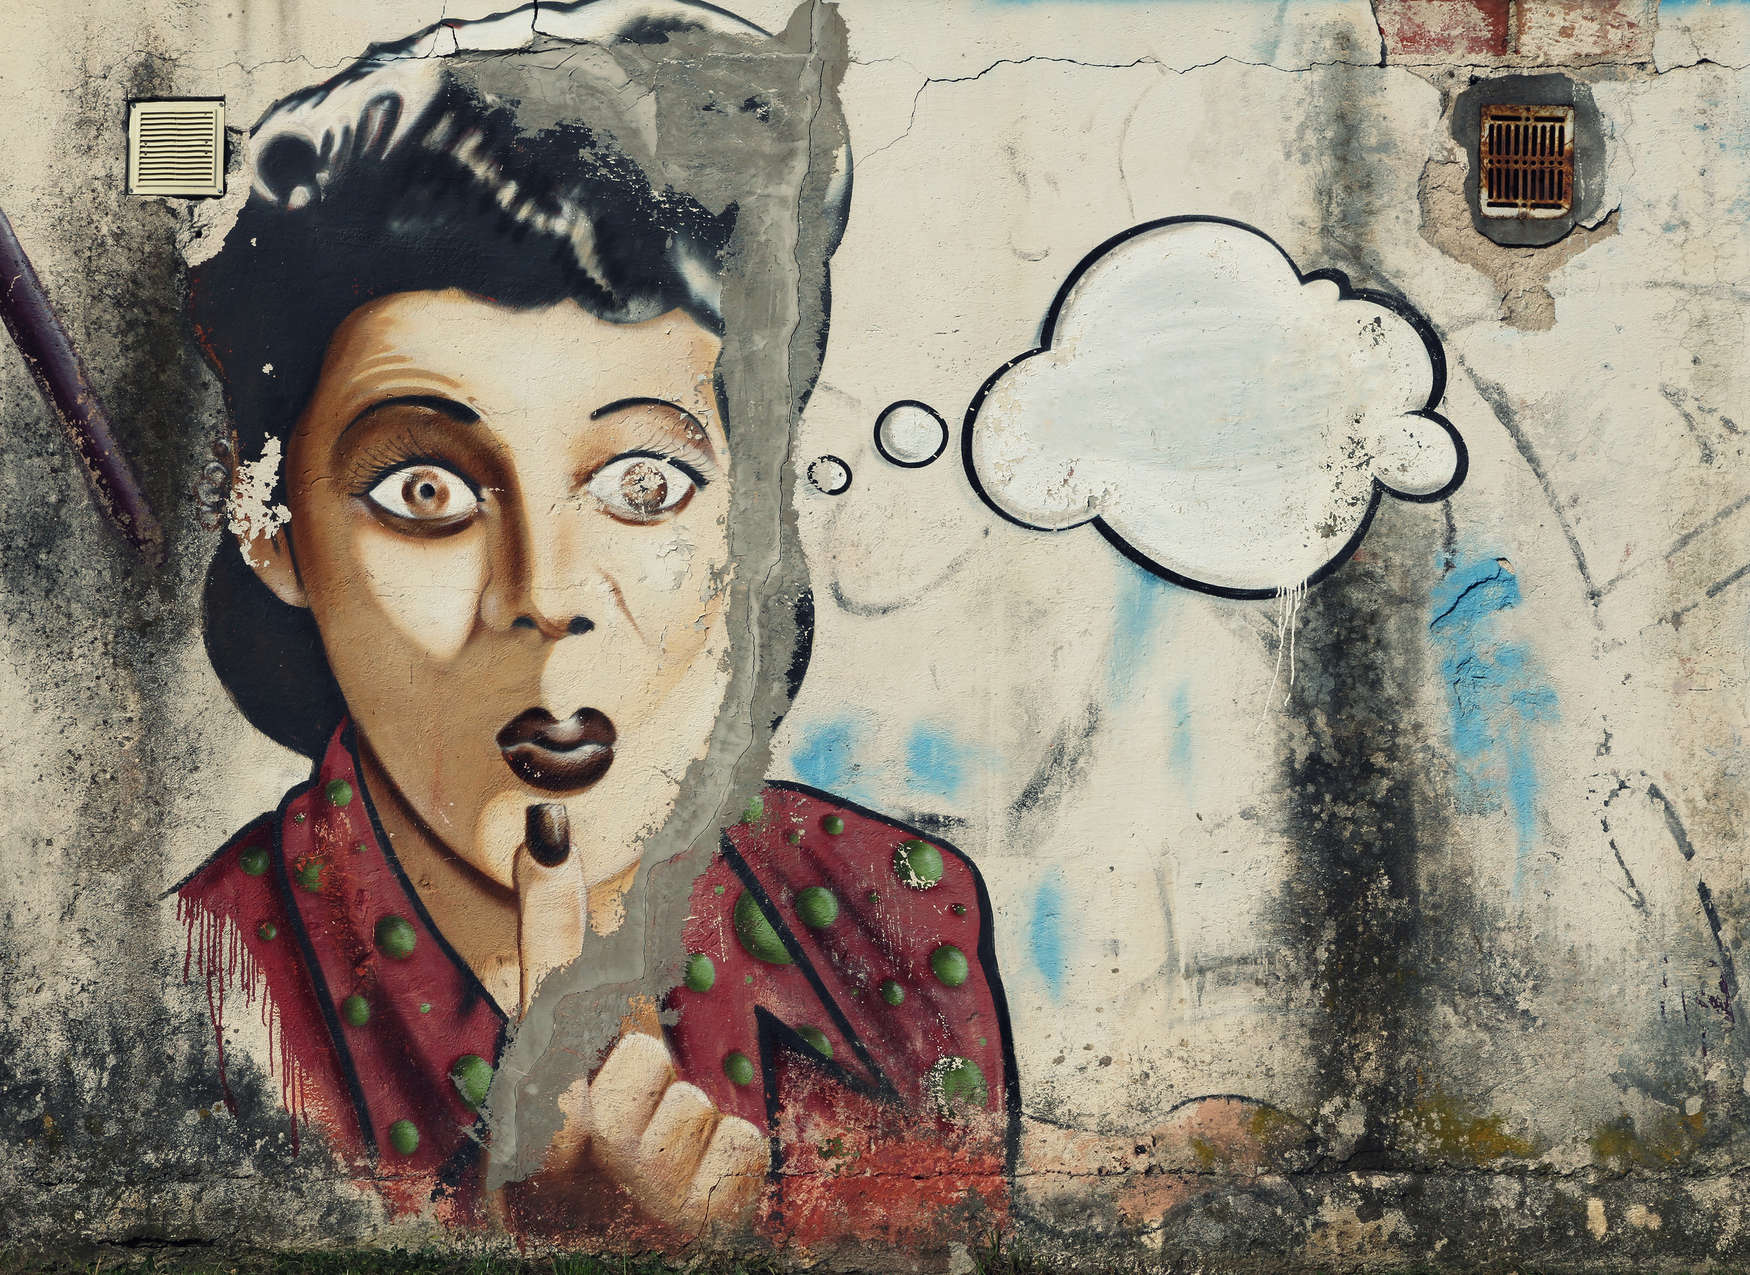             Fototapete Frau mit Gedankenblase als Graffiti auf Steinwand – Grau, Rot, Weiß
        